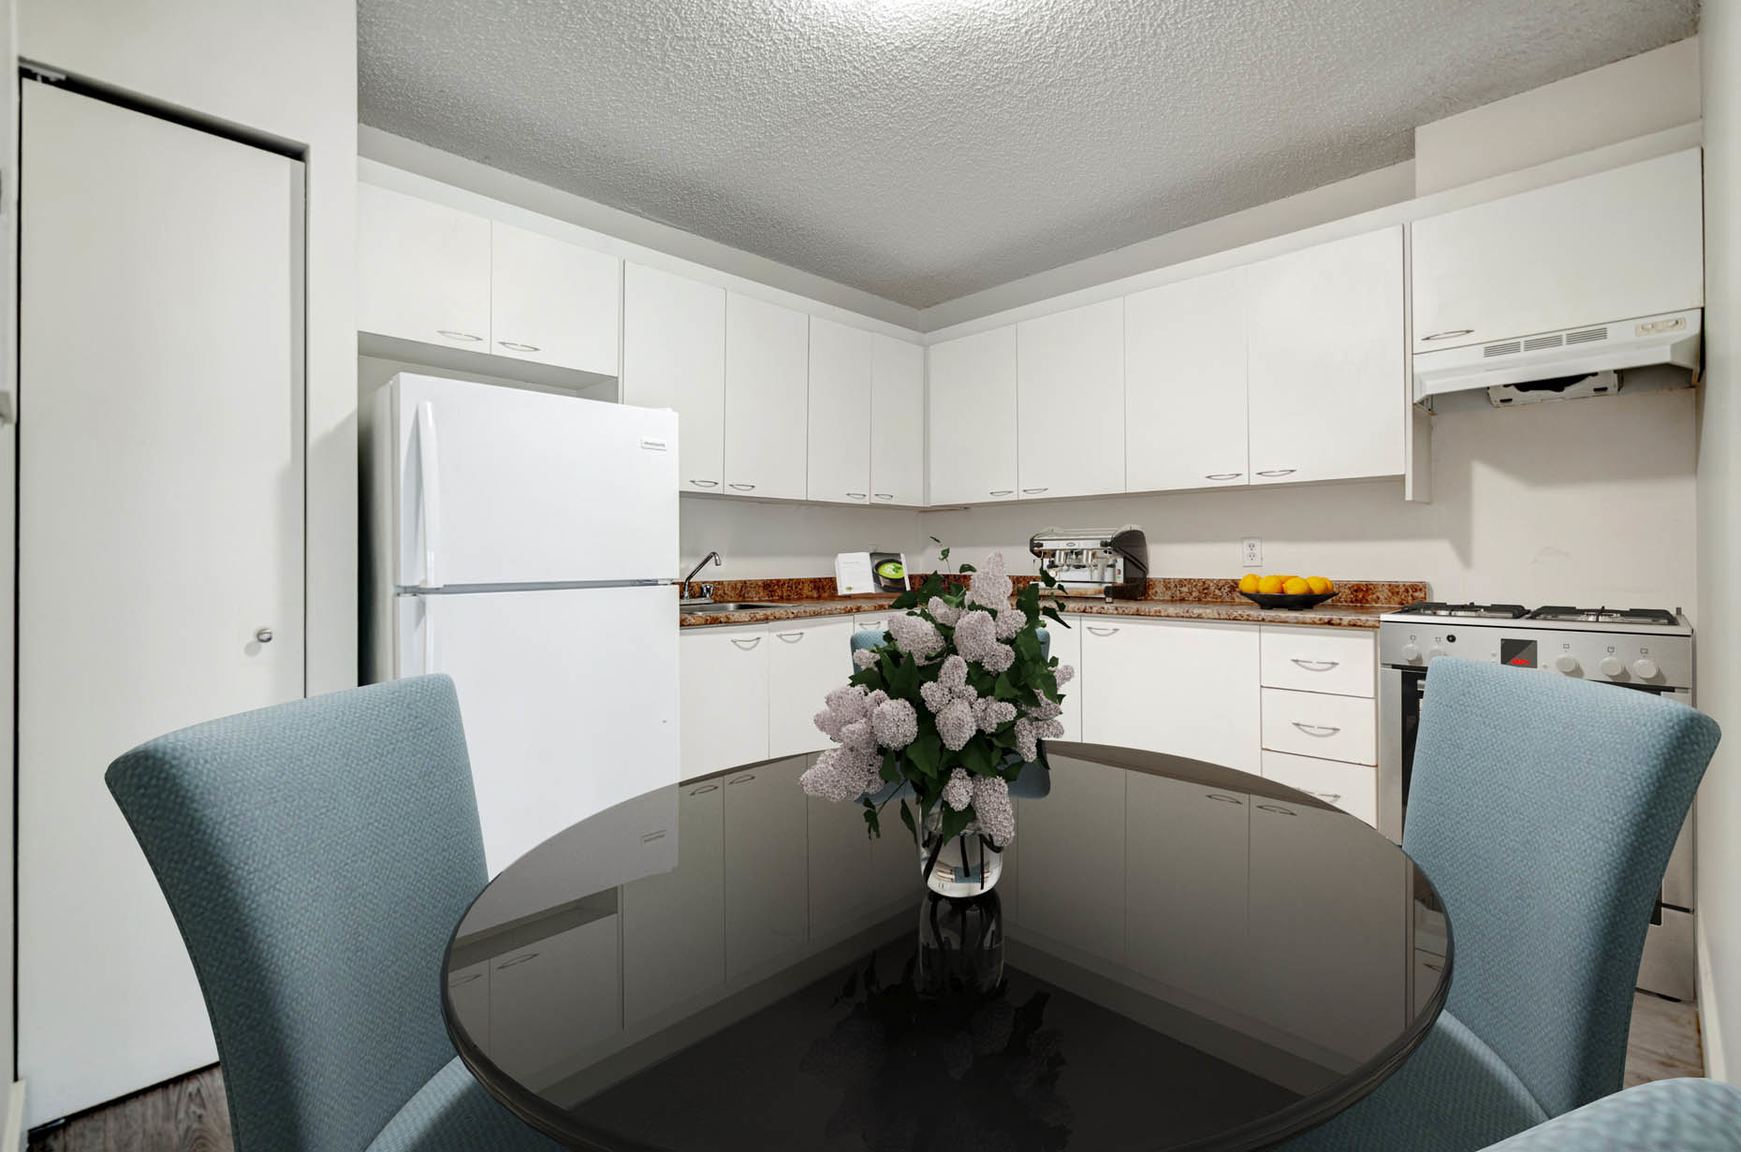 2 bedroom Apartments for rent in Ville St-Laurent - Bois-Franc at Complexe Deguire - Photo 06 - RentersPages – L417457